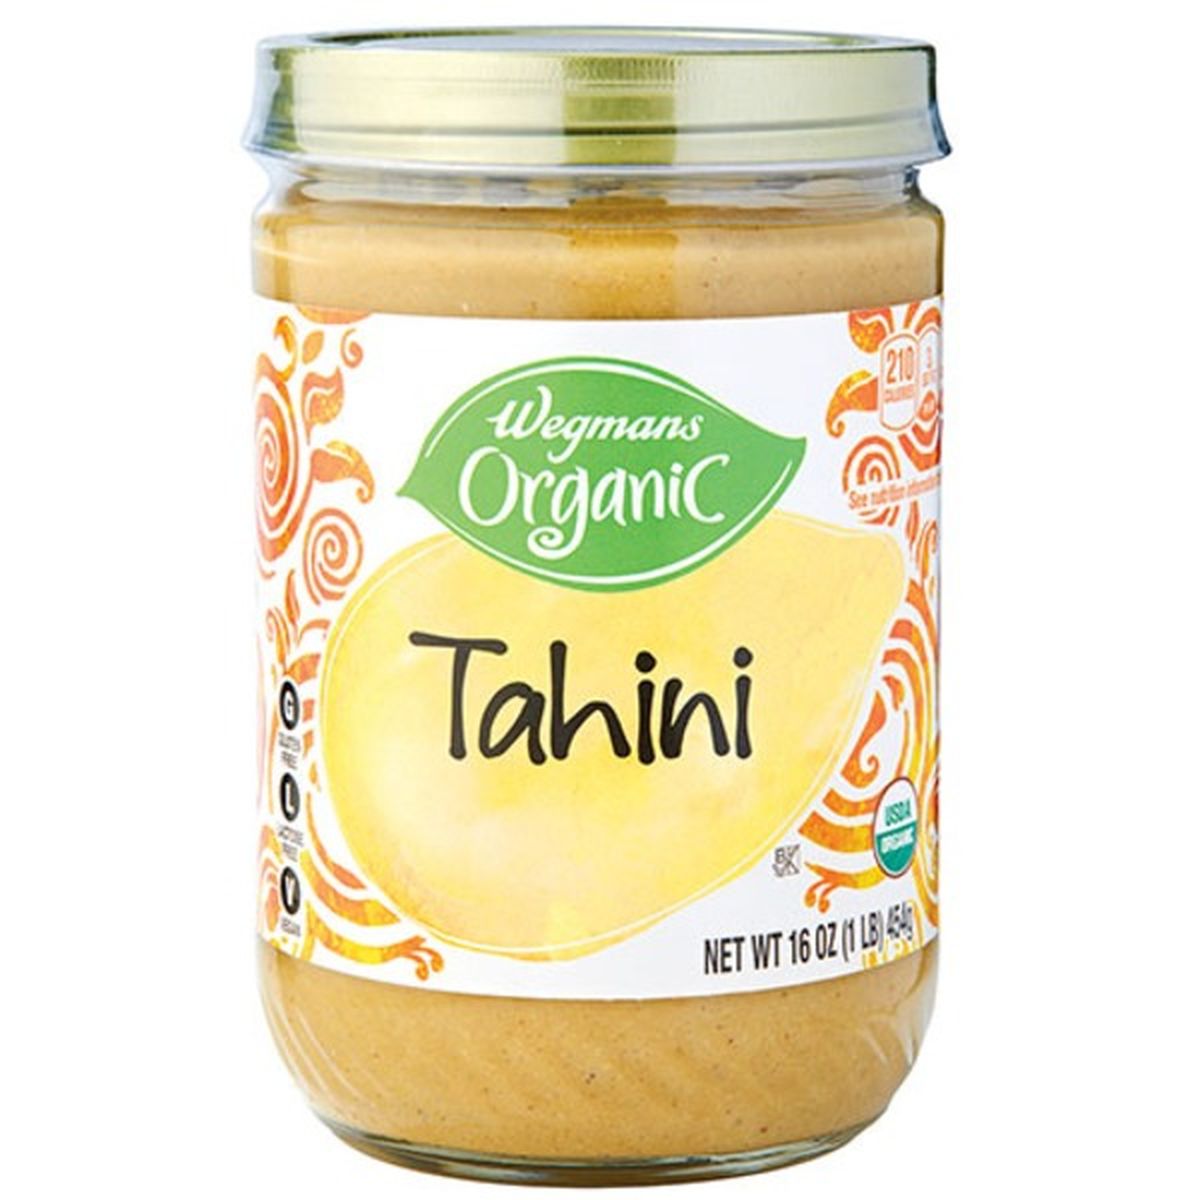 Calories in Wegmans Organic Tahini